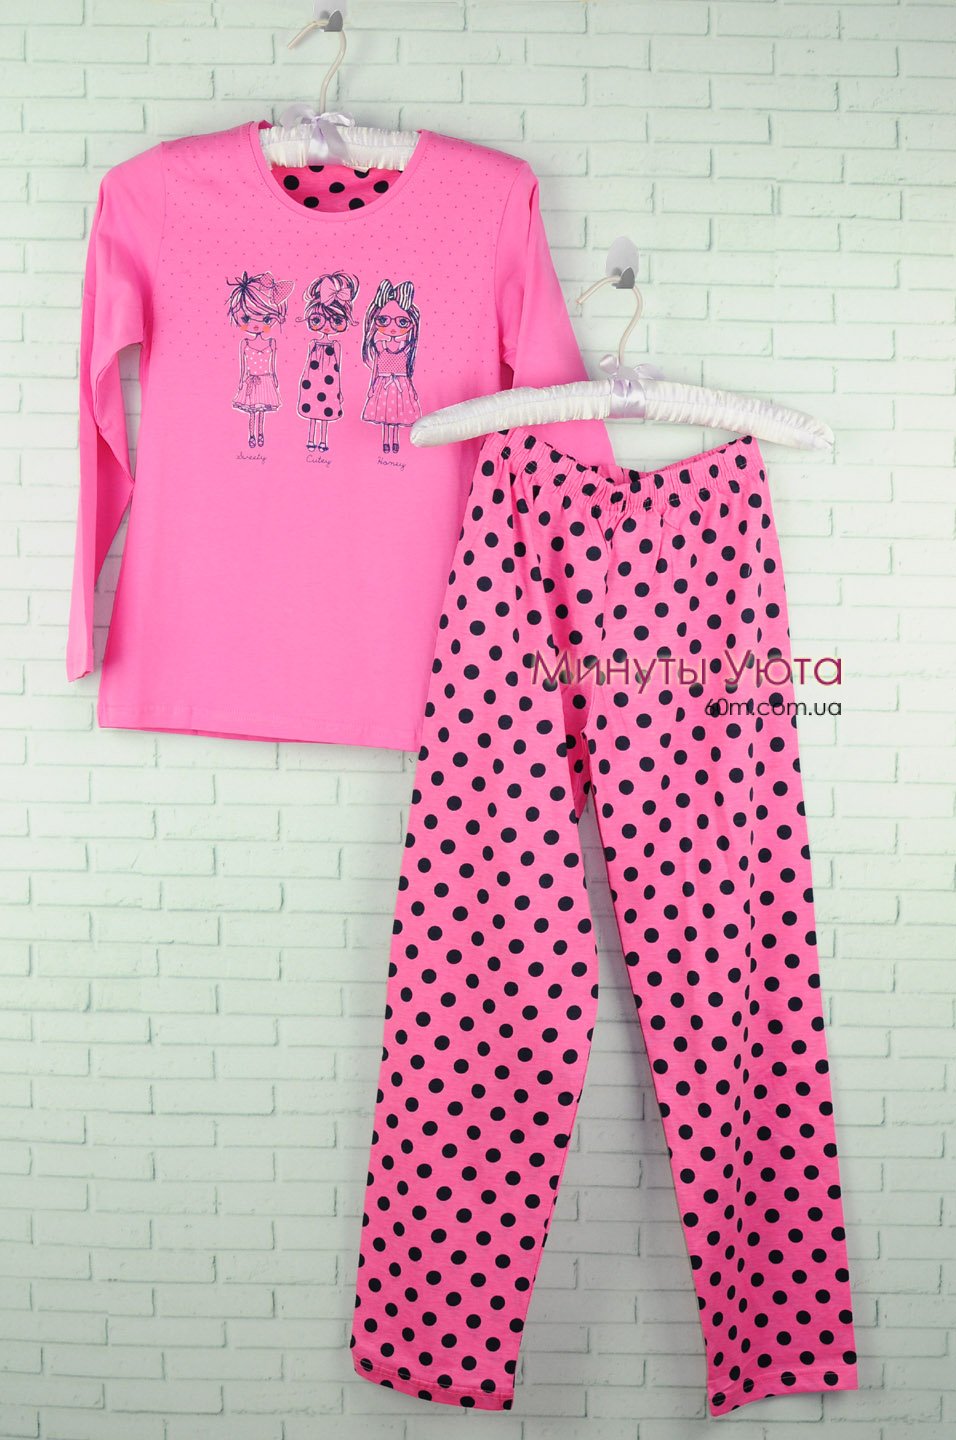 Пижама в розовом цвете с девочками 